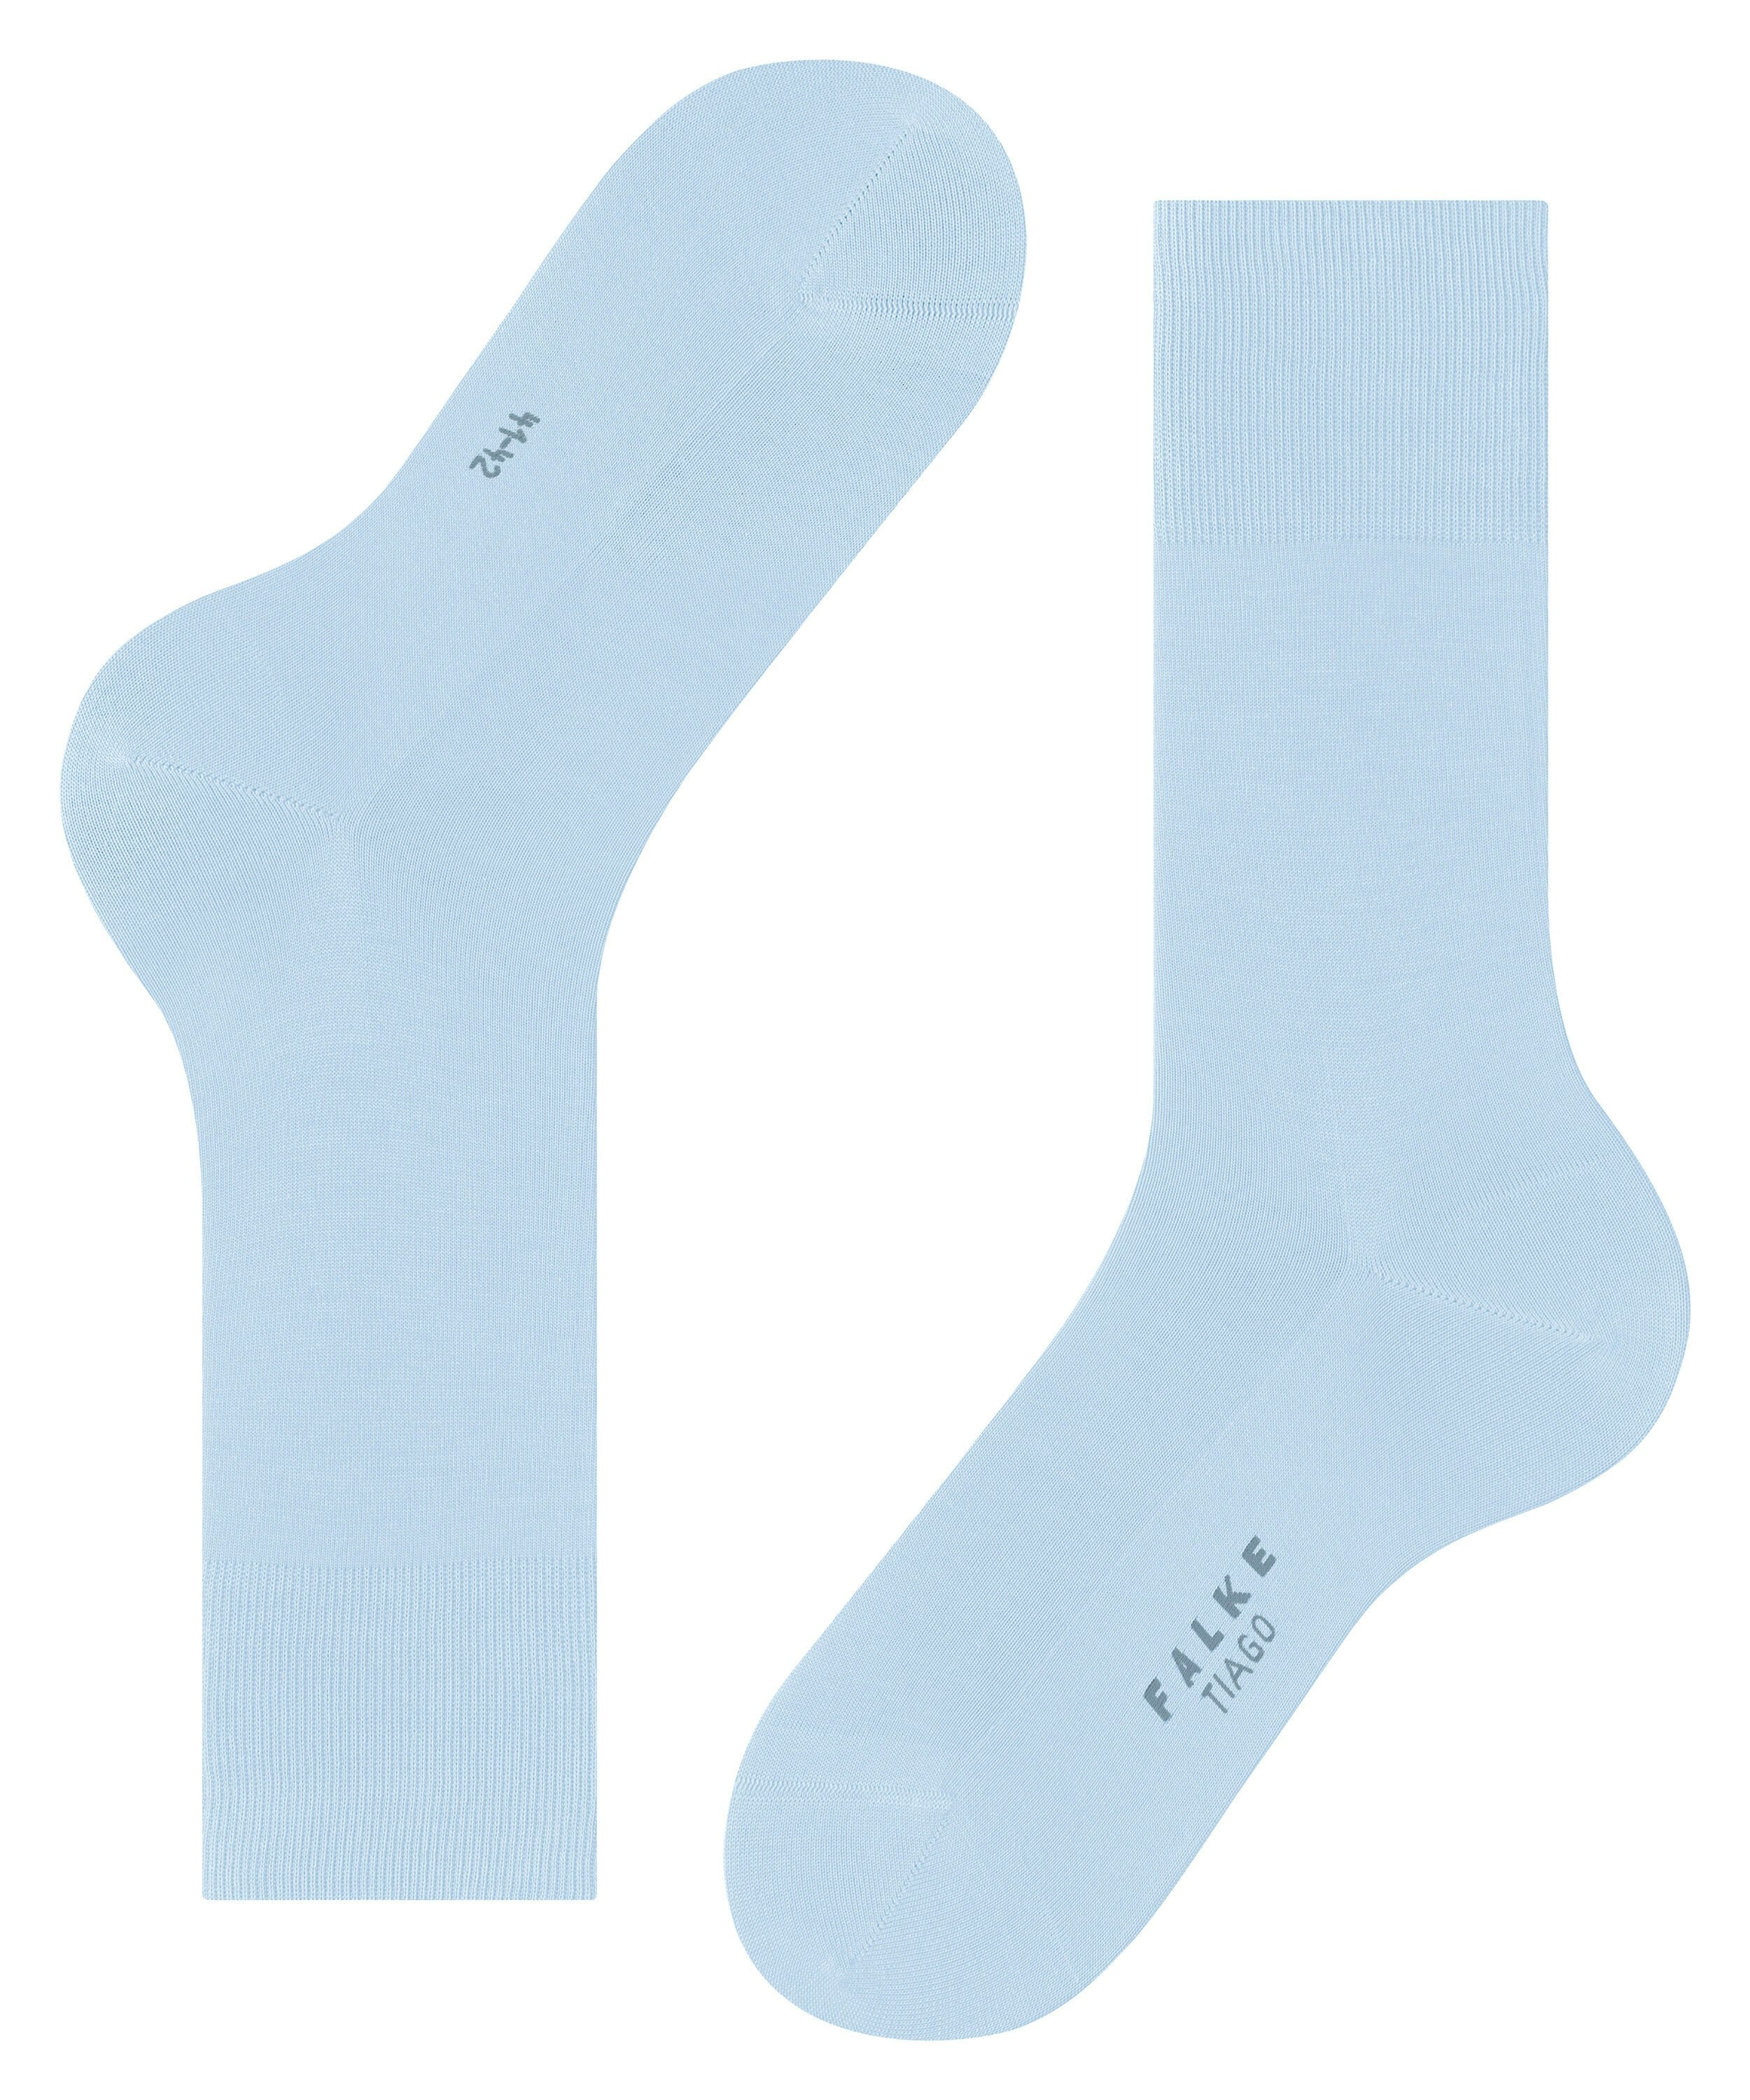 FALKE Tiago Socks in Bluebell 14792